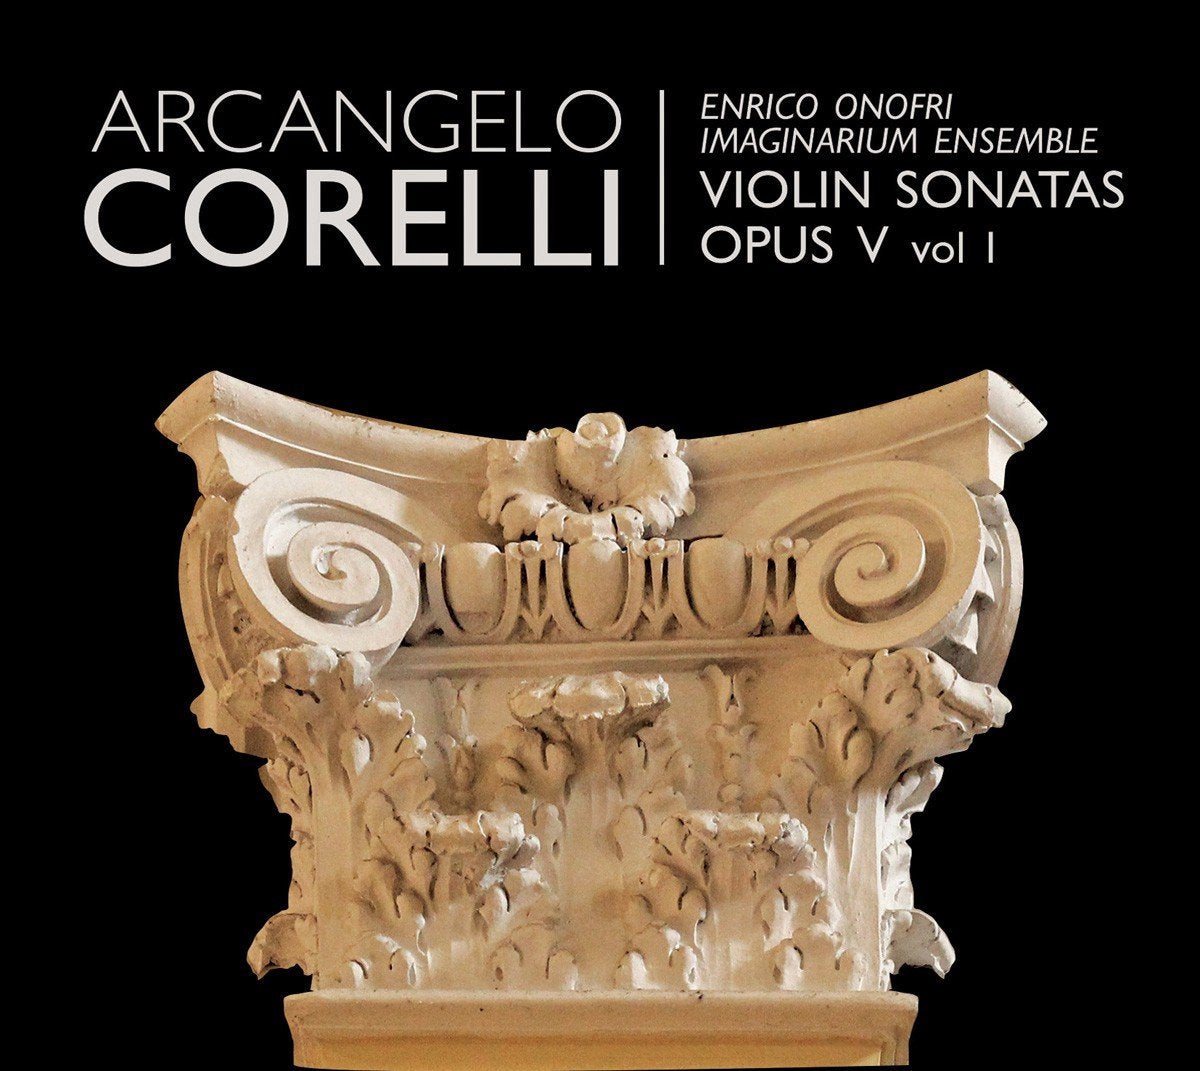 Corelli: Violin Sonatas, Op. 5, Vol. 1 - Imaginarium Ensemble